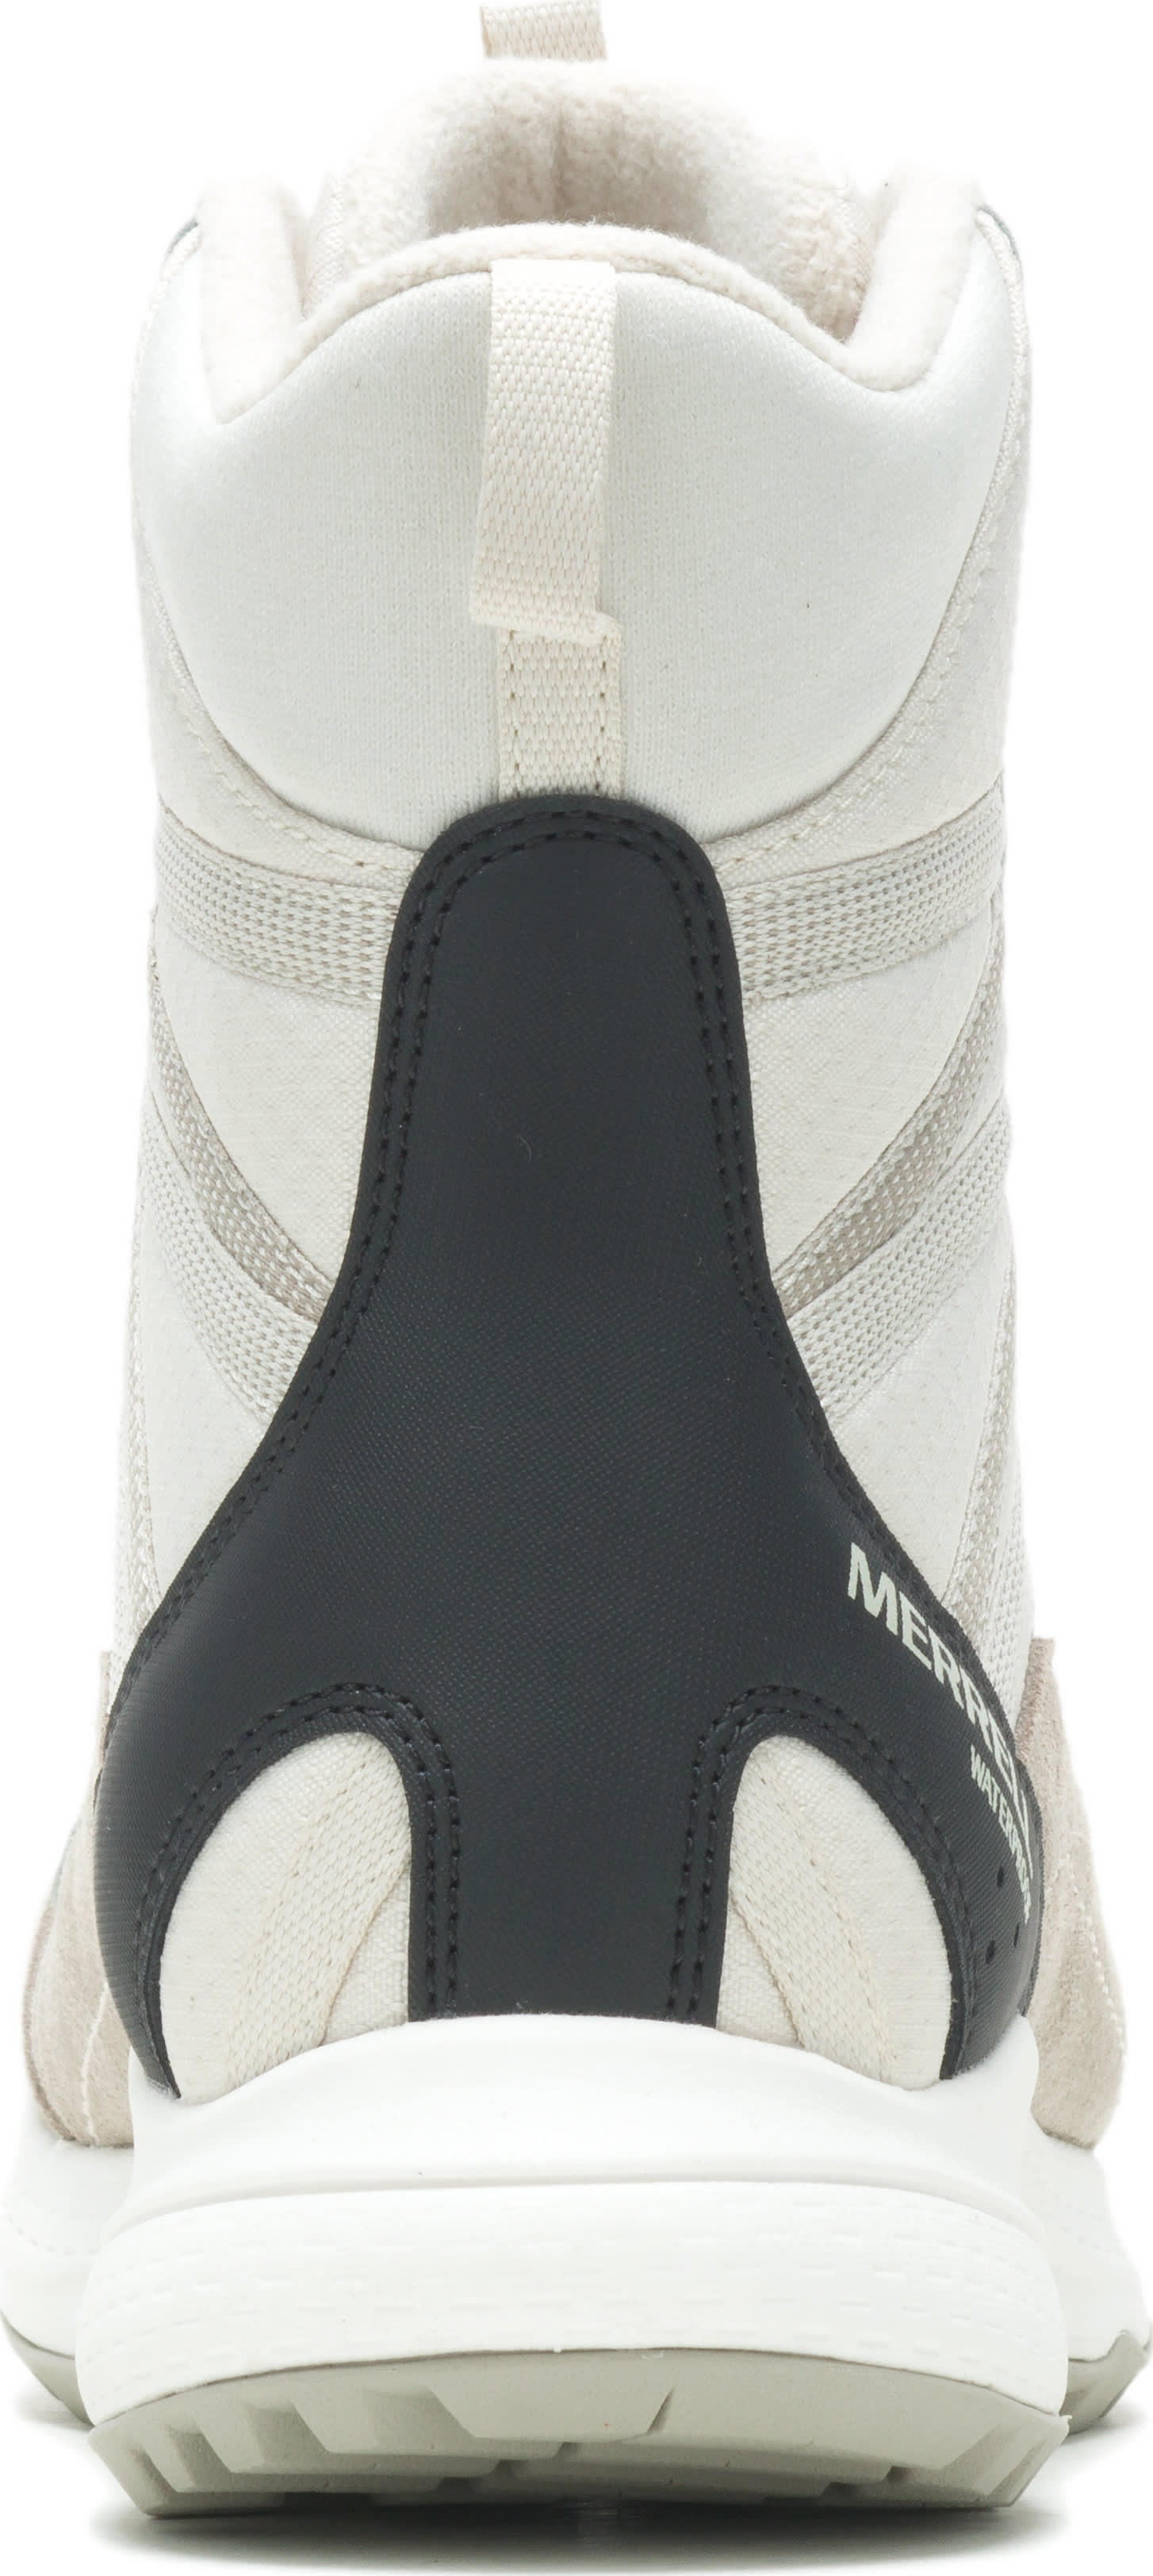 Merrell Bravada 2 Thermo Mid Waterproof Women's Boots - Black/White